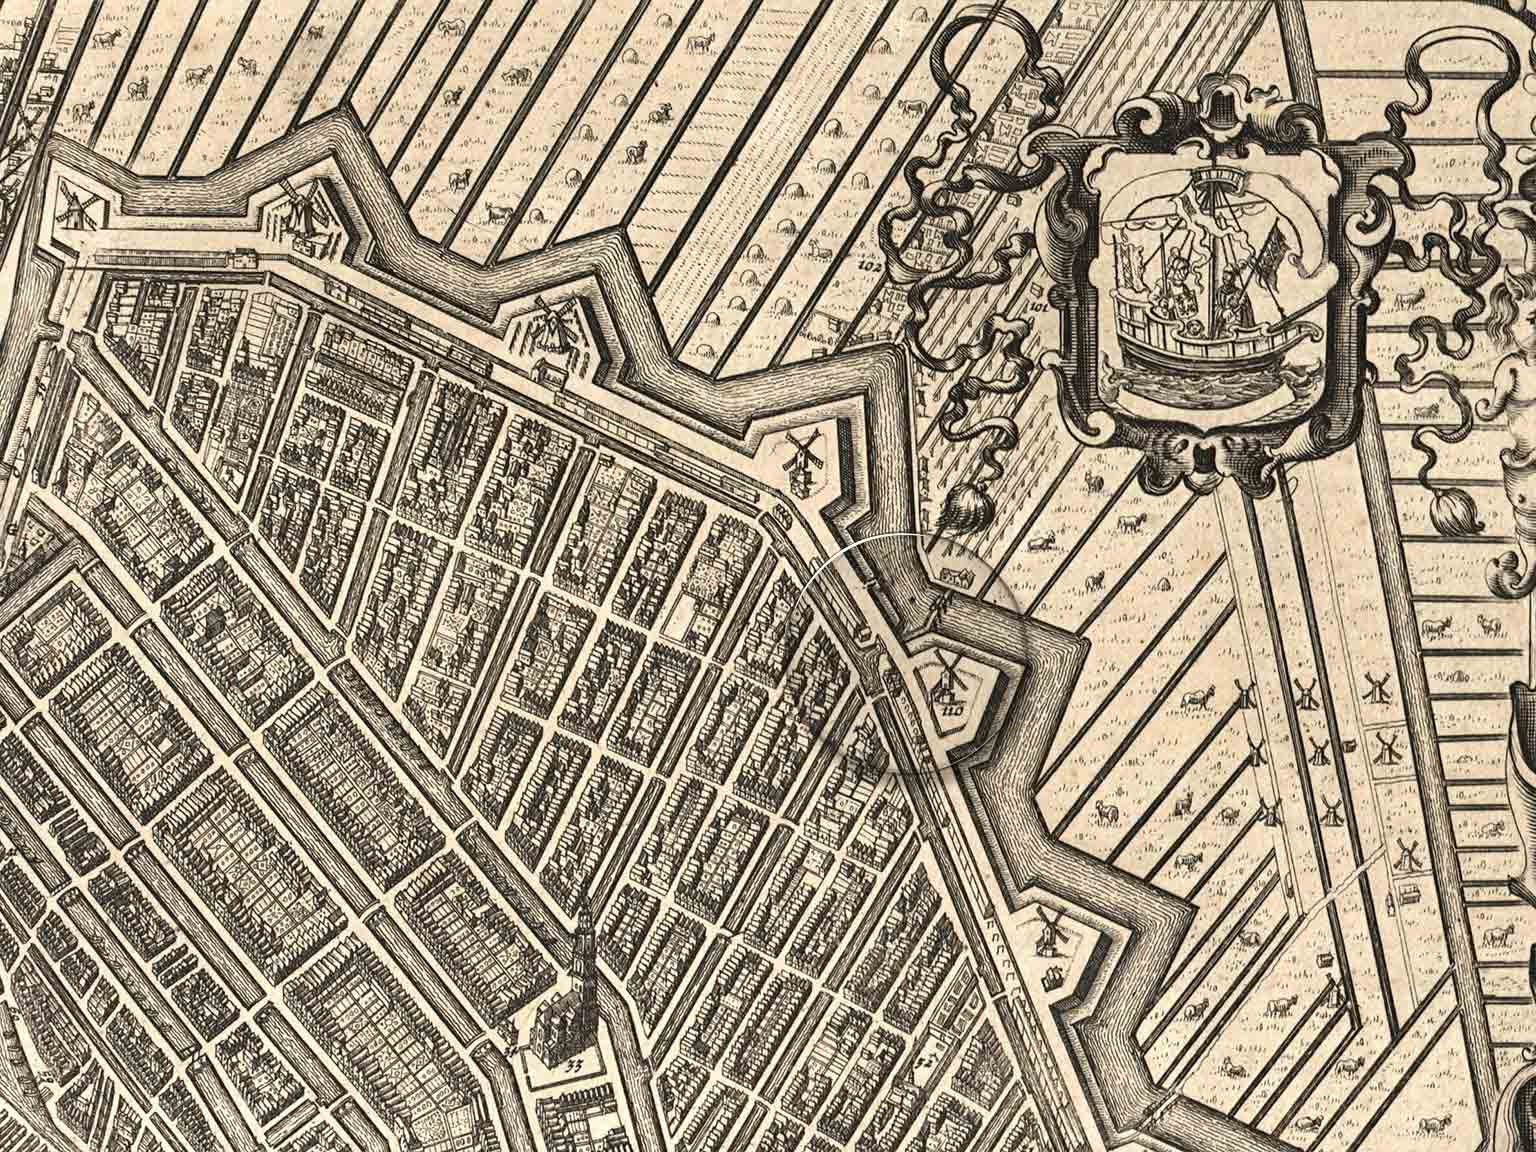 Bullebakssluis and Raampoort bridge, Amsterdam, detail of a map from 1657 by Johannes Janssonius